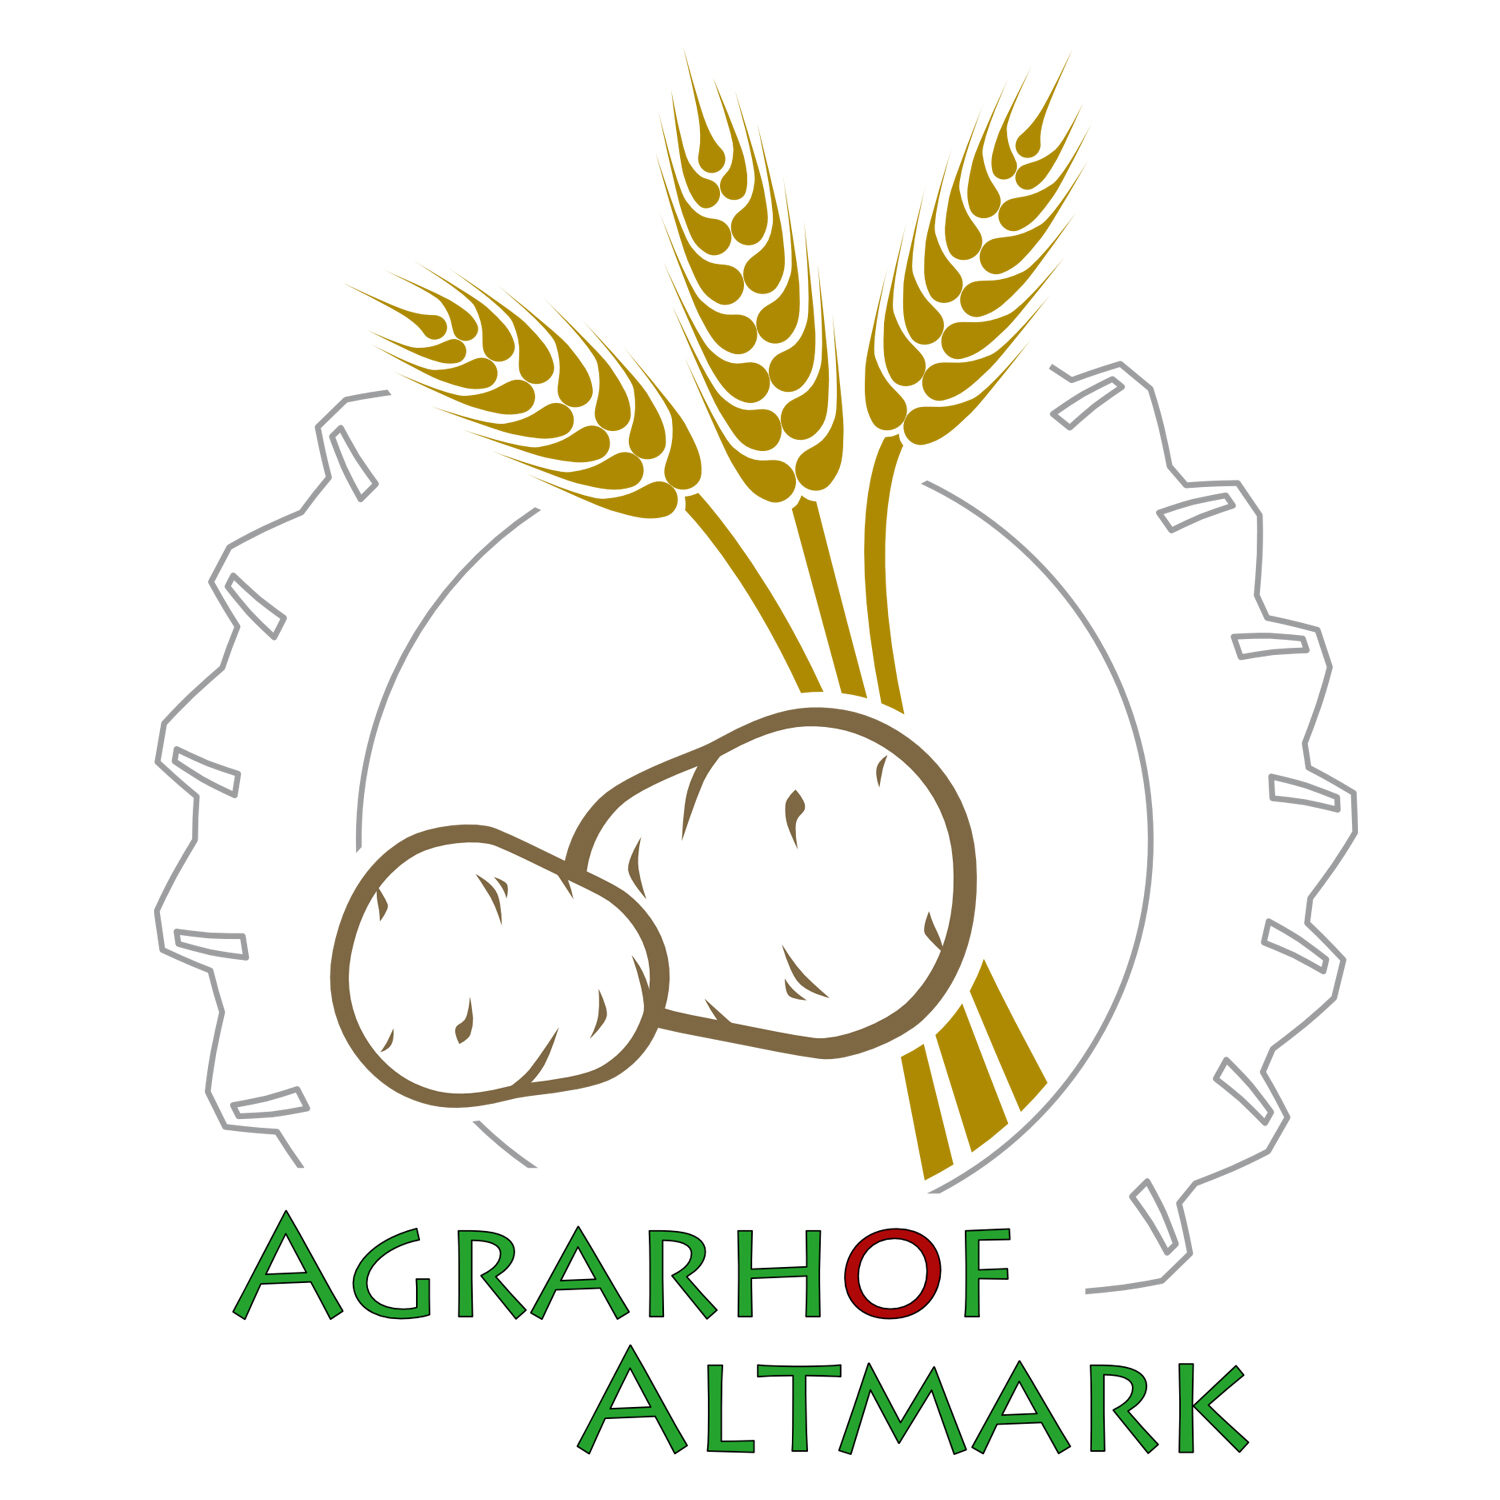 Agrarhof Altmark